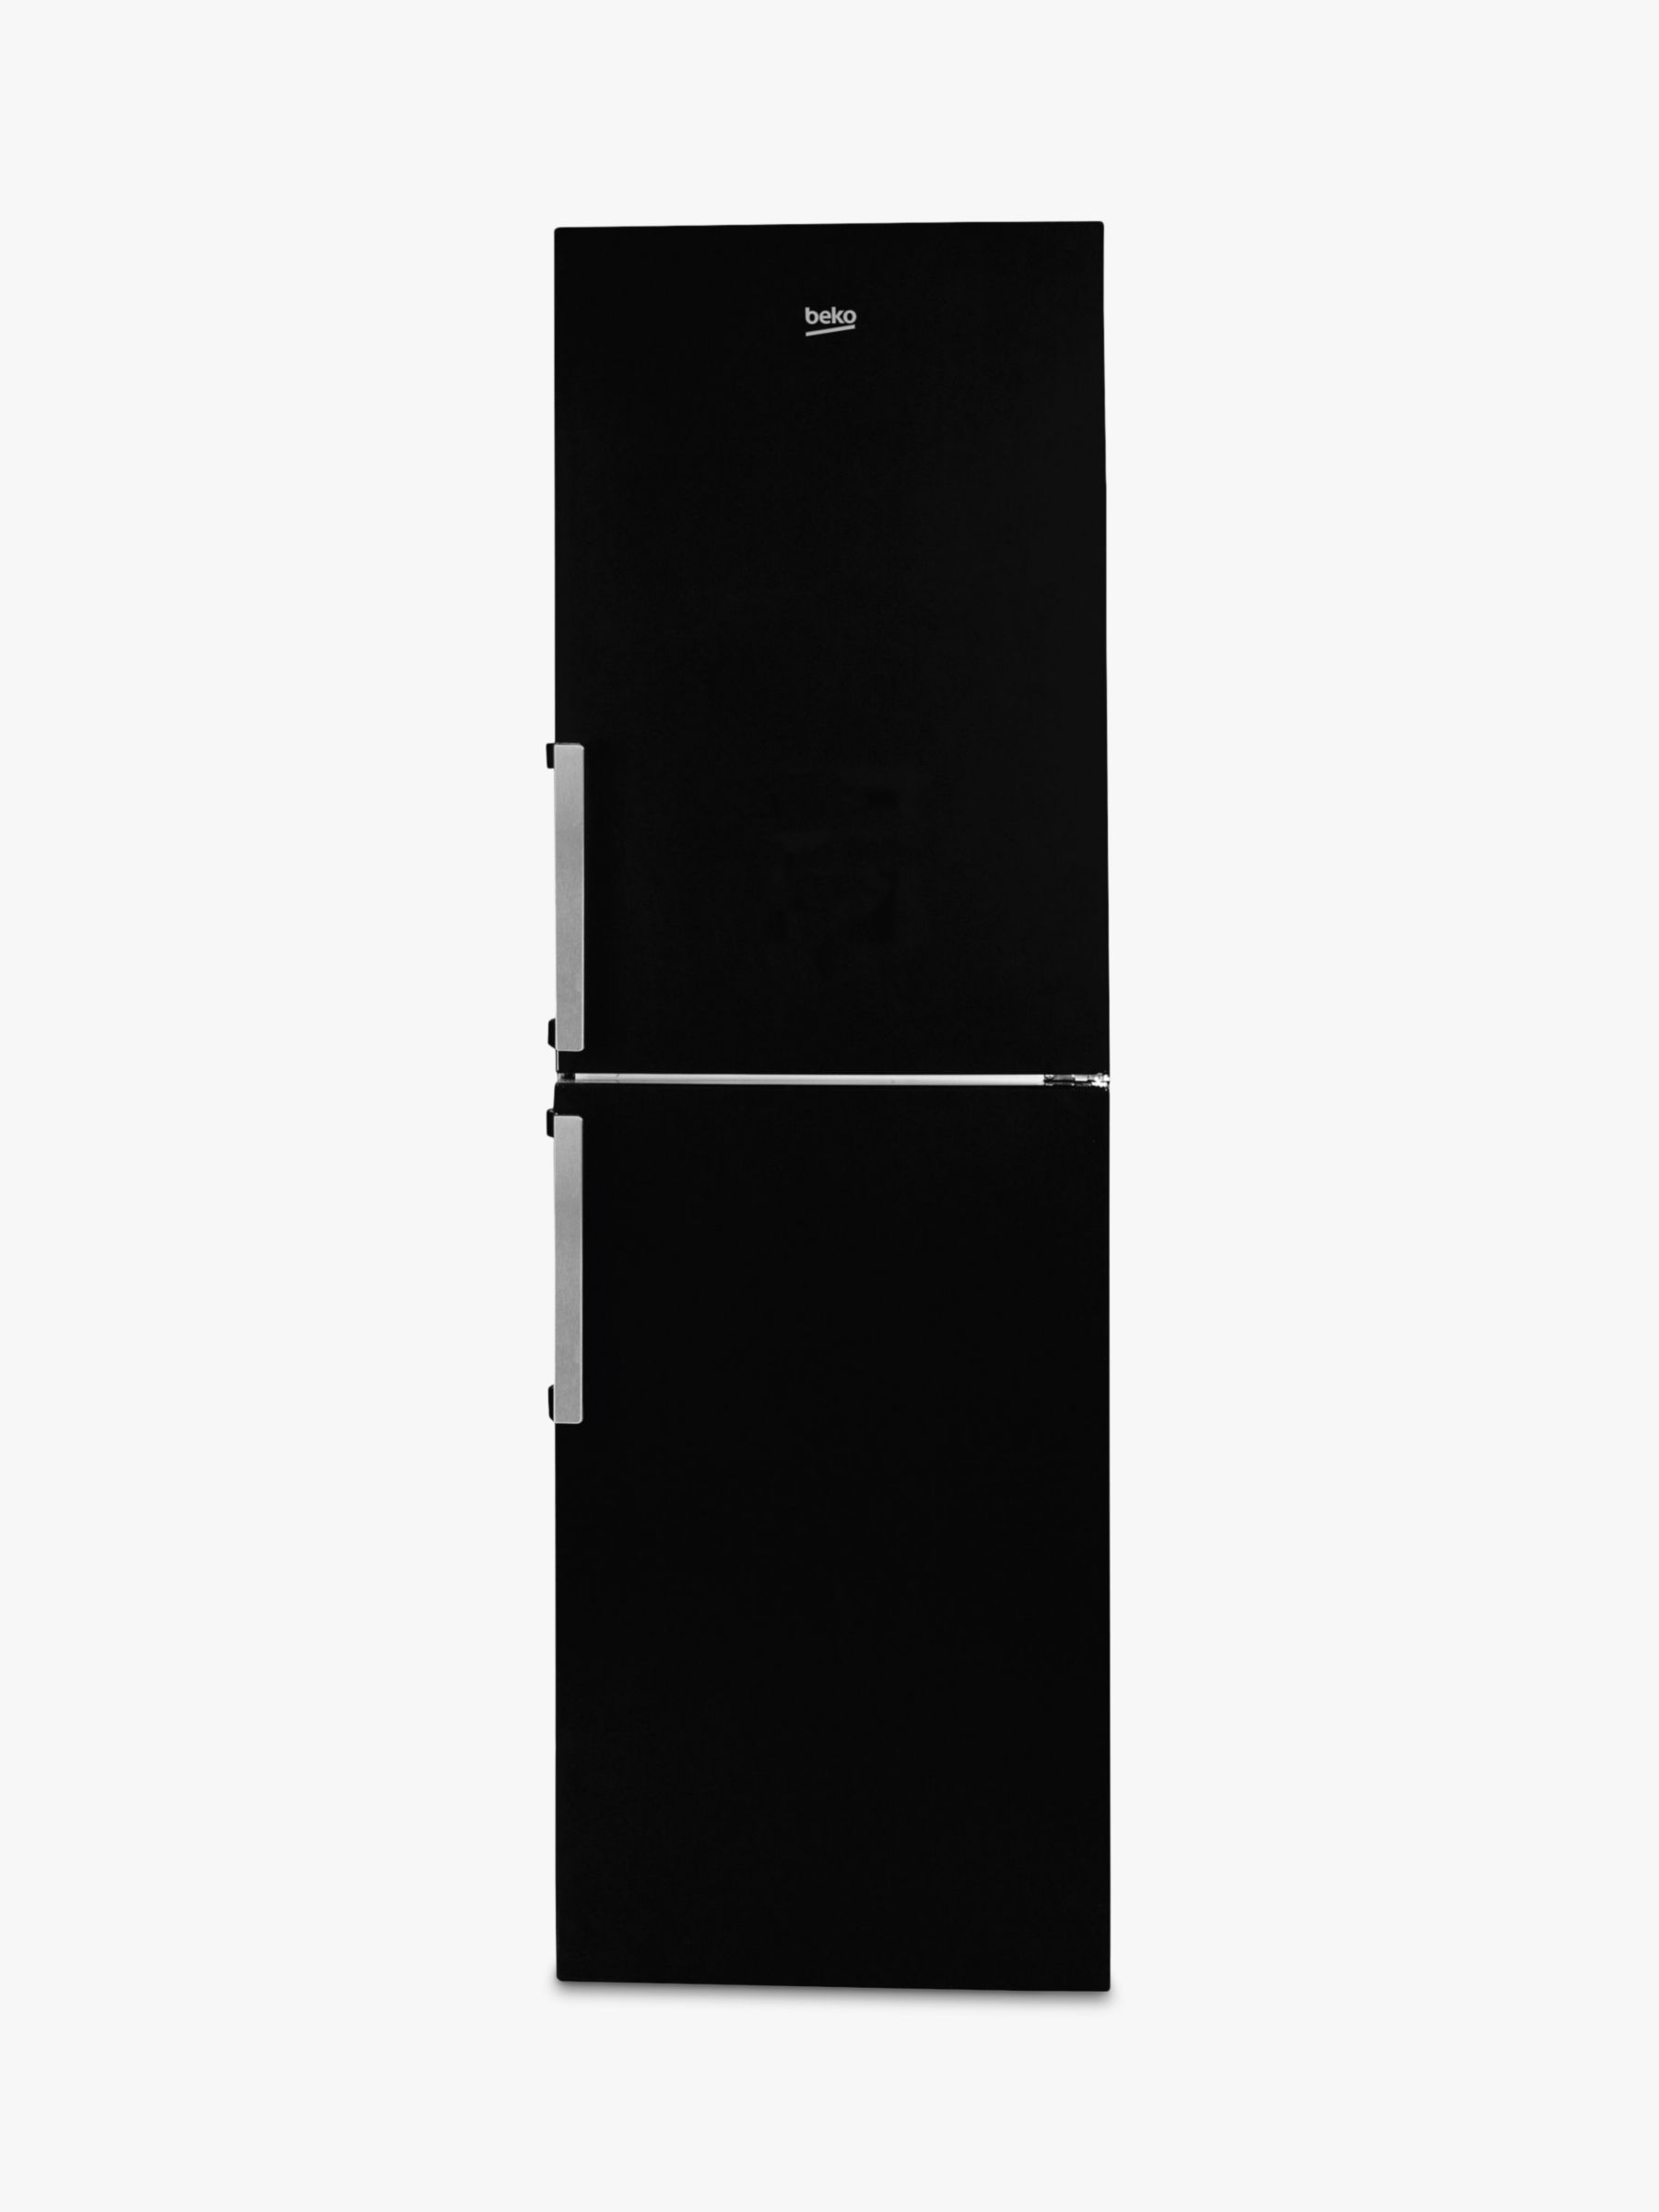 Beko CFP1691B Fridge Freezer, A+ Energy Rating, 60cm Wide, Black